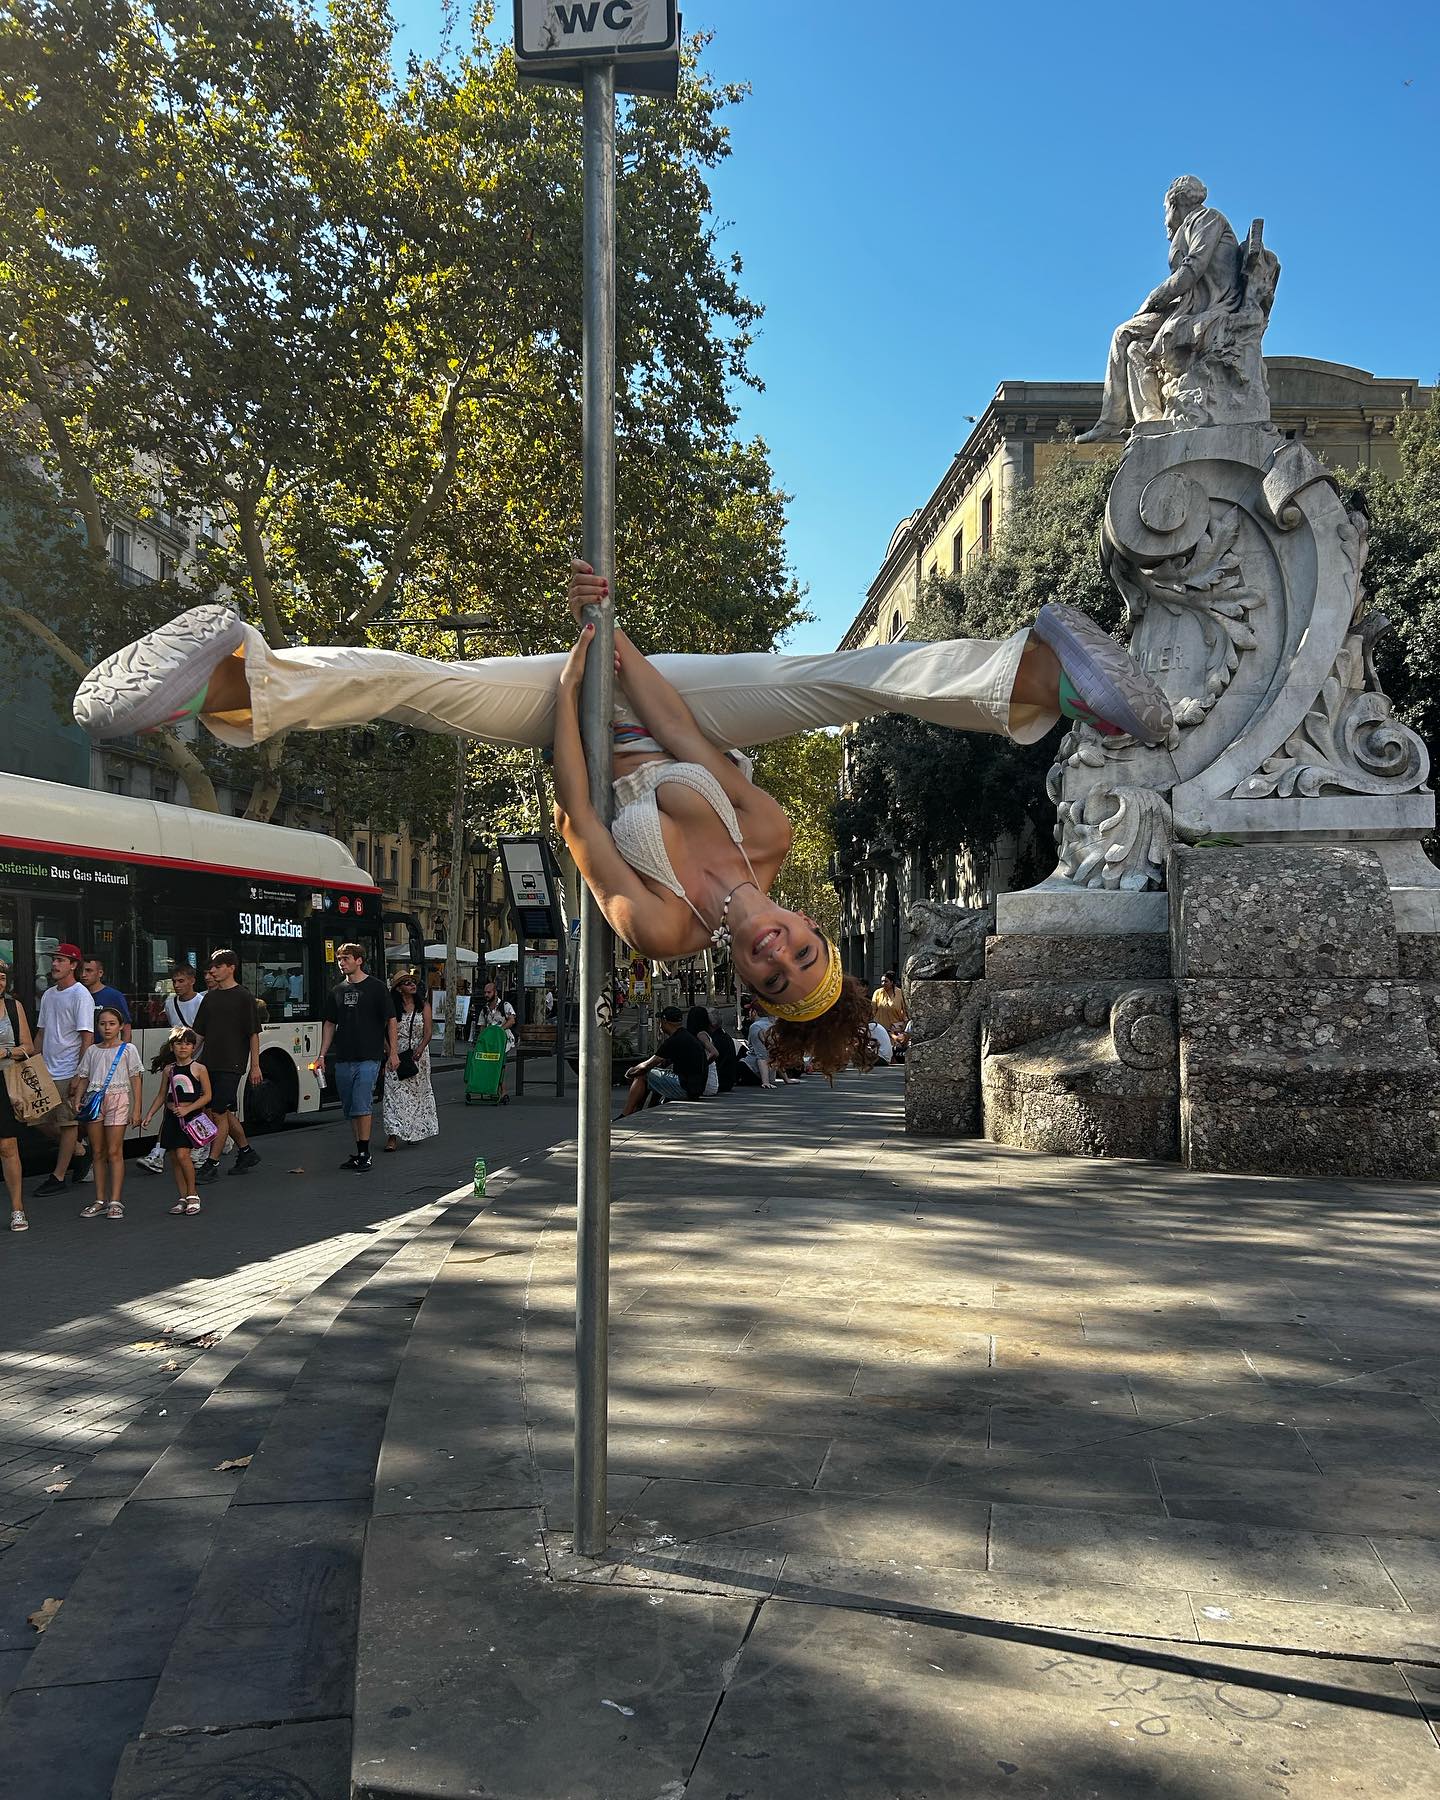 Inverted 🐨

#larambra #quartieregoticobarcellona #barcellona #europe #giusyravanni #poledancestreet #poledanceinversion #inversion #pdinversion #pdpose #pdstreetpole